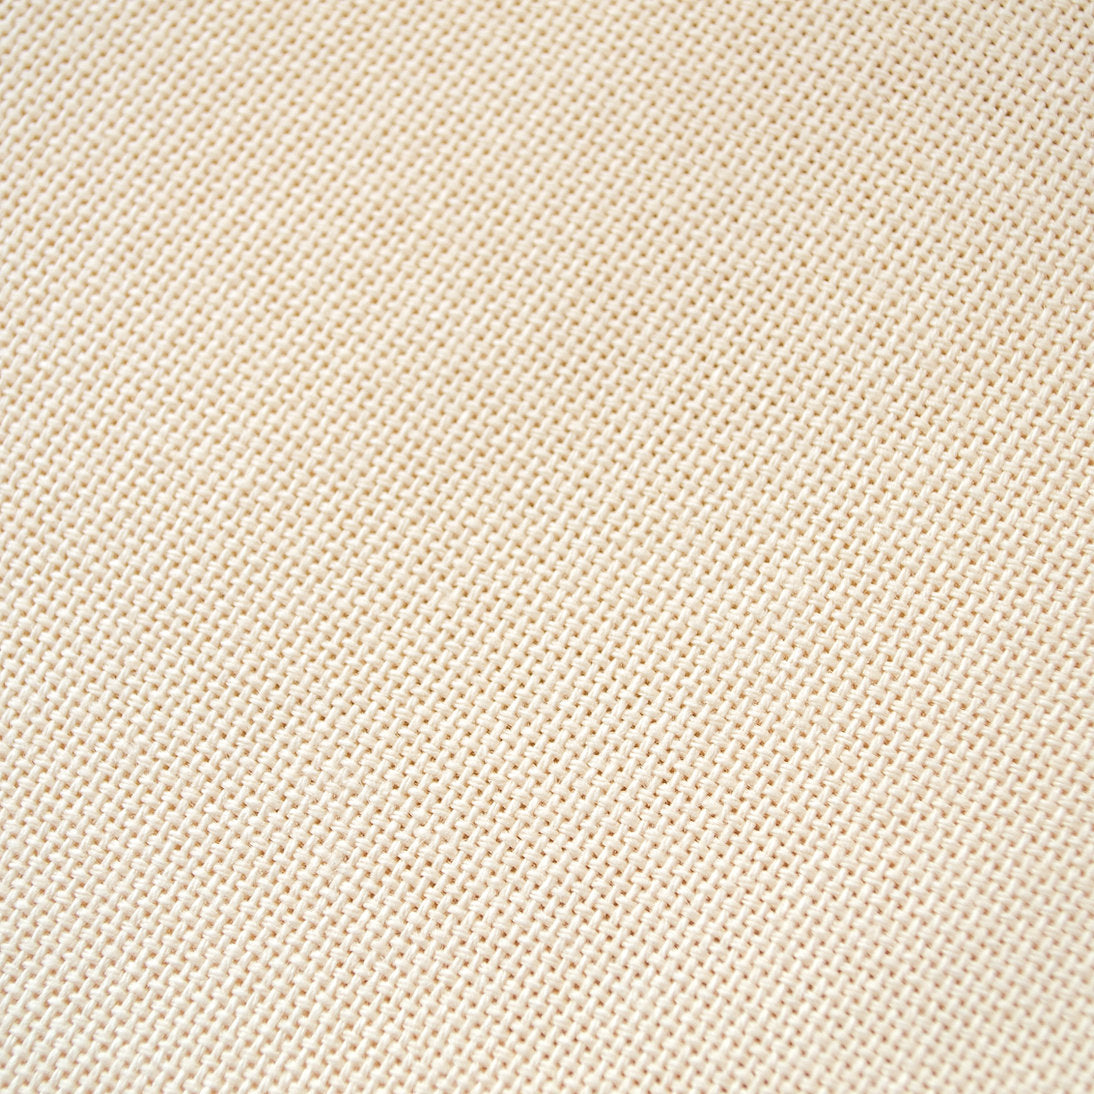 3835/264 Lugana Fabric 25 ct. ZWEIGART Ivory for Cross Stitch